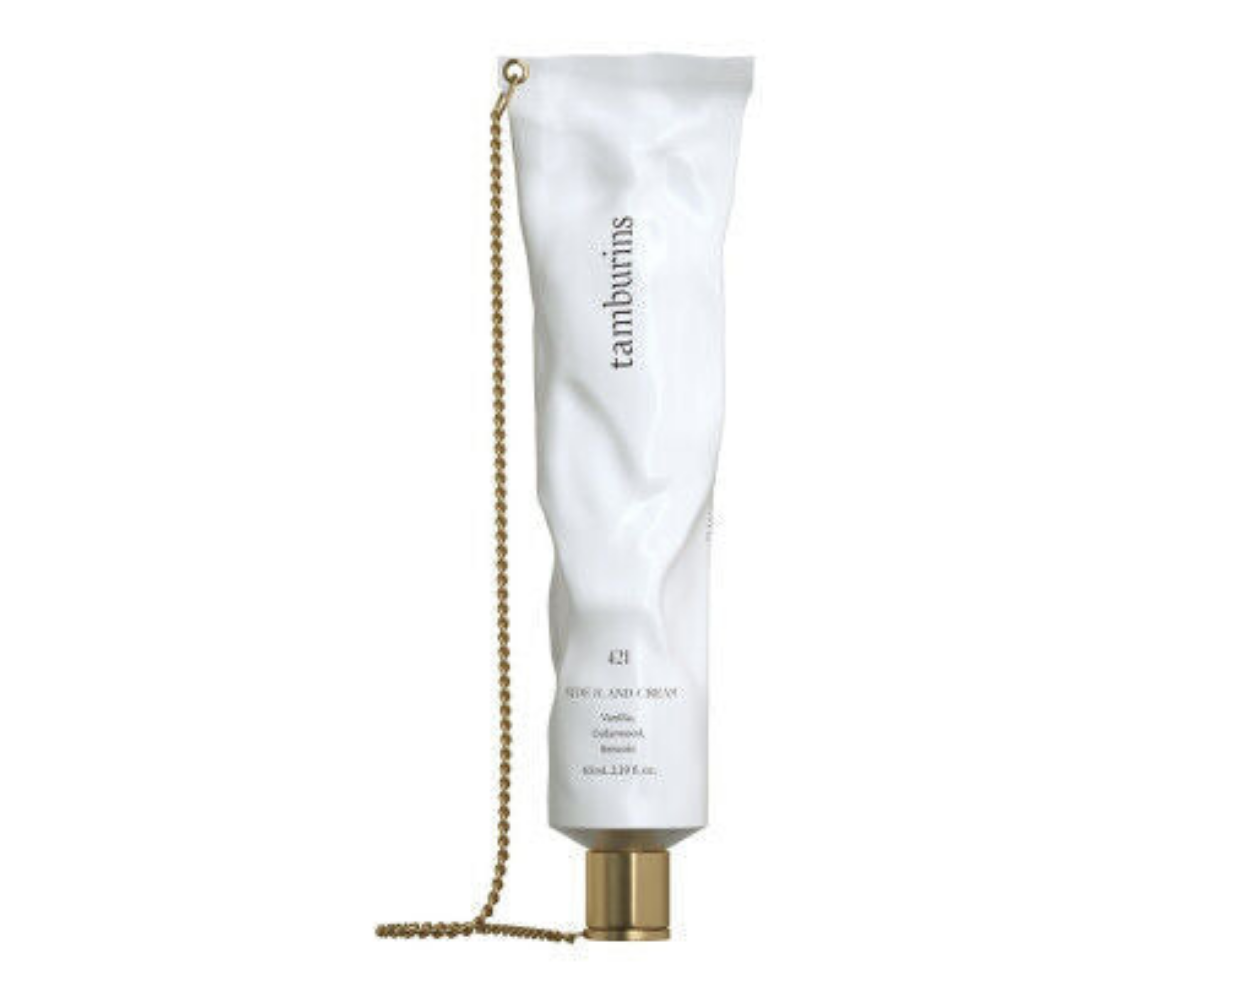 Luxurious TAMBURINS Chain Hand Cream in a 30ml tube with a gold chain detail.